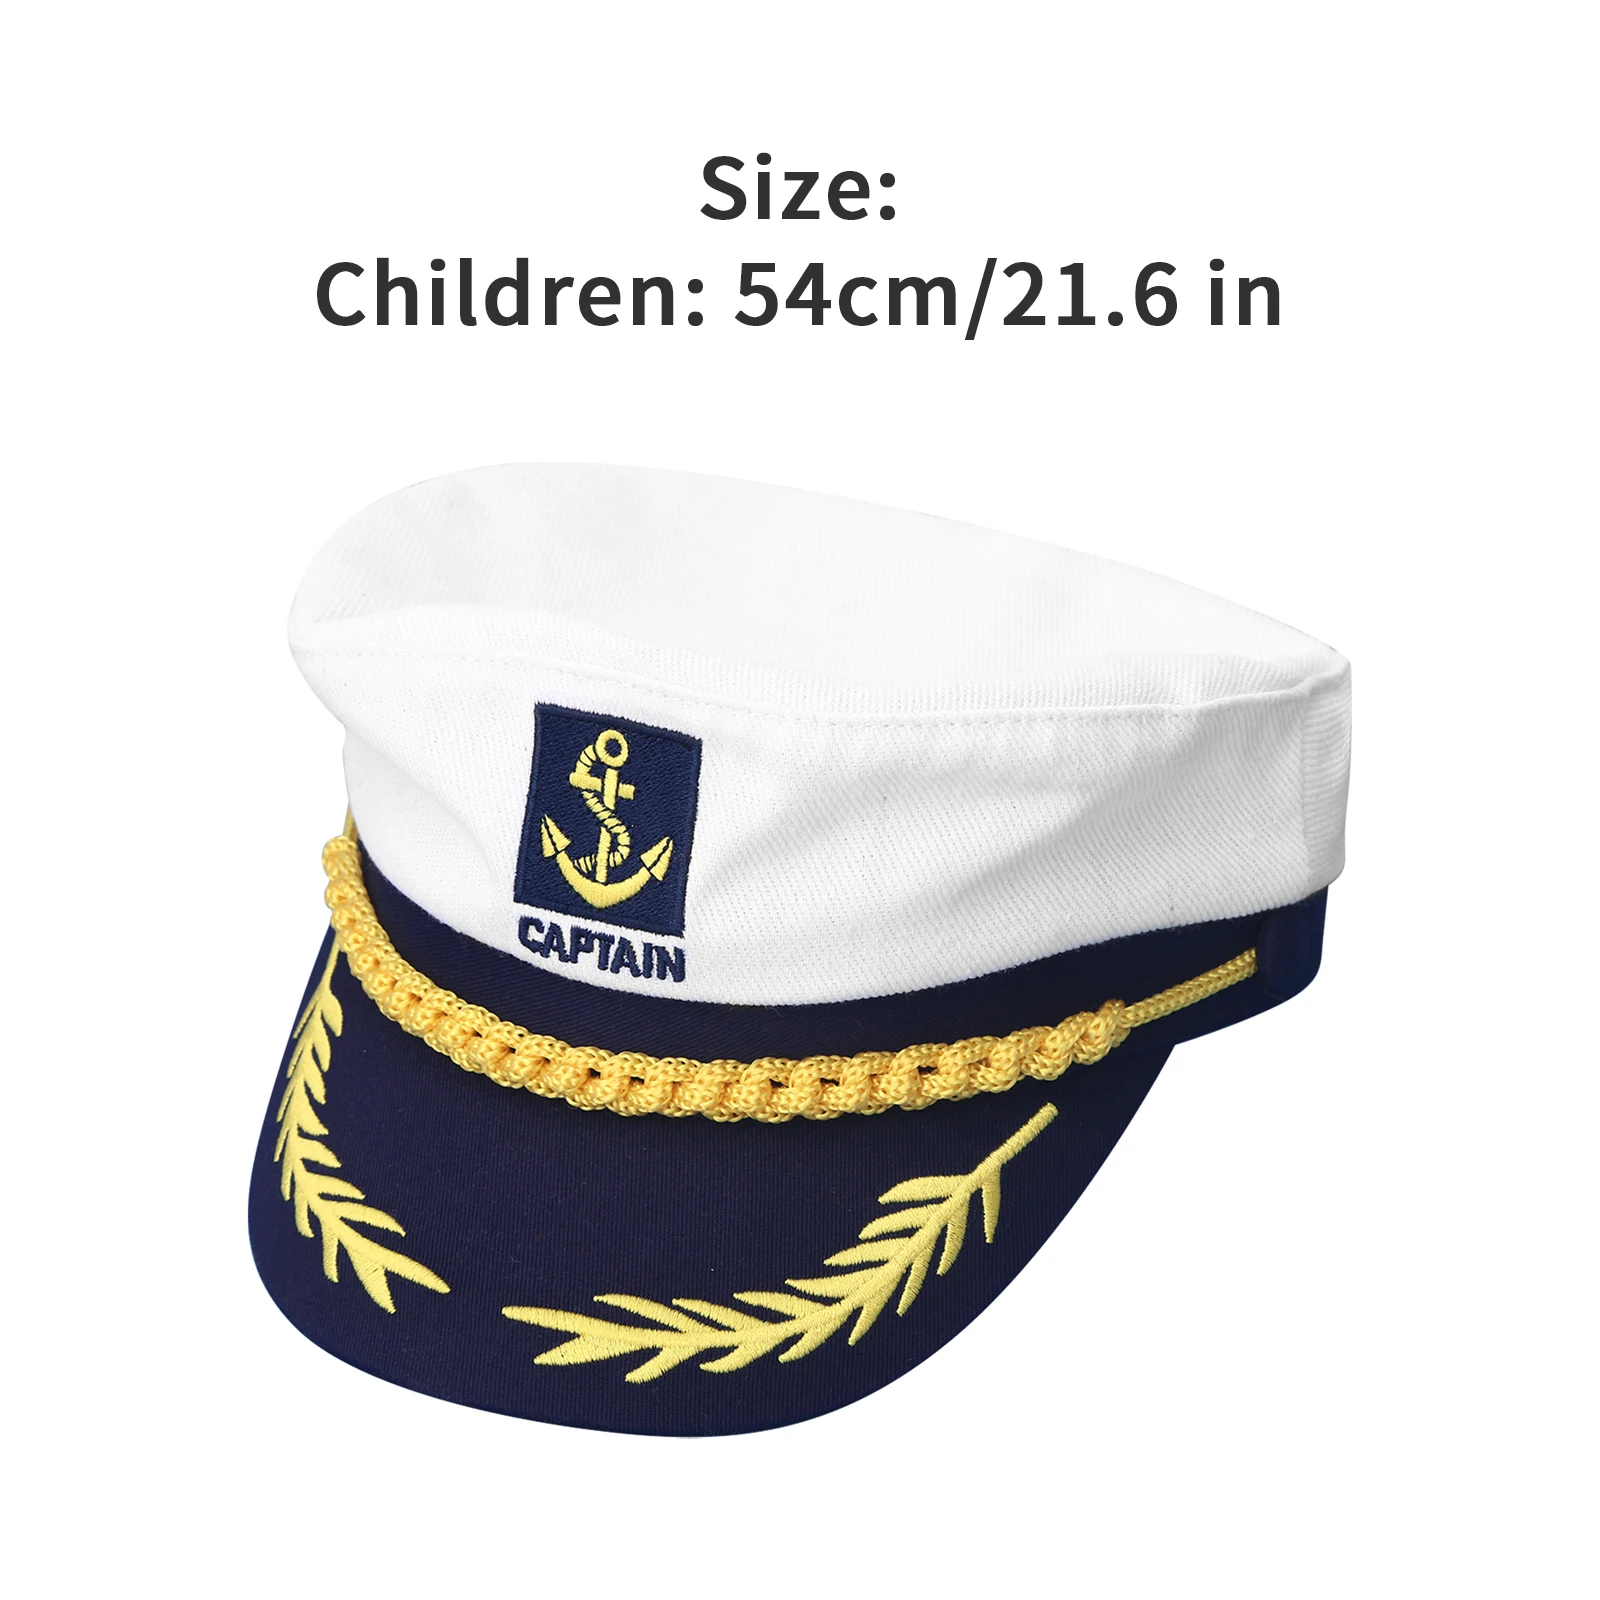 Mens Deluxe Sailor Captain Fancy Dress Hat Cap White/Black New by Smiffys 